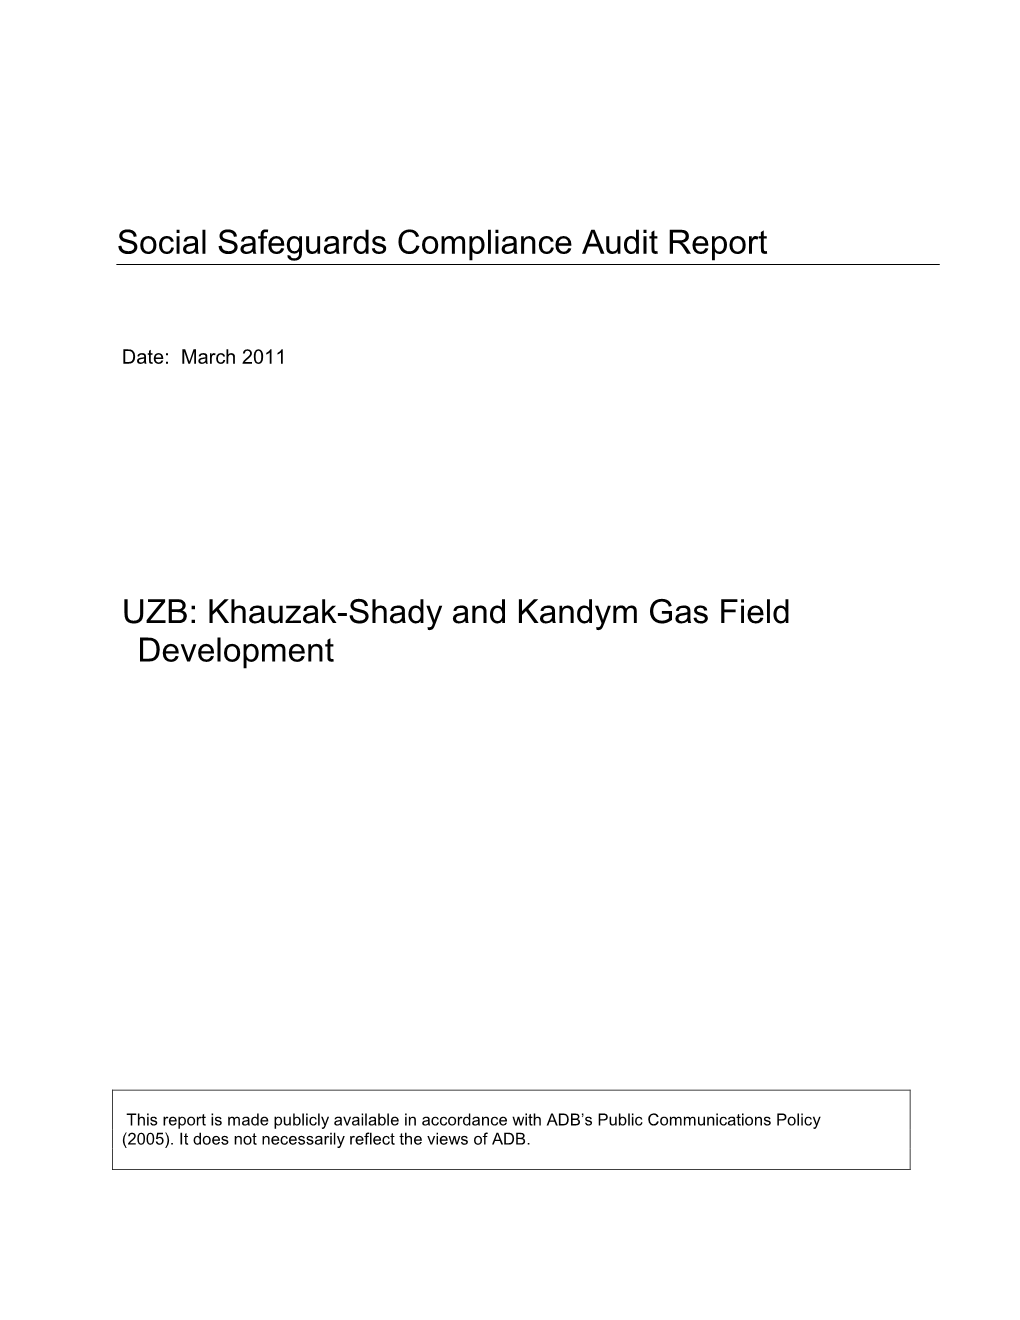 SCAR: Uzbekistan: Khauzak-Shady and Kandym Gas Field Development